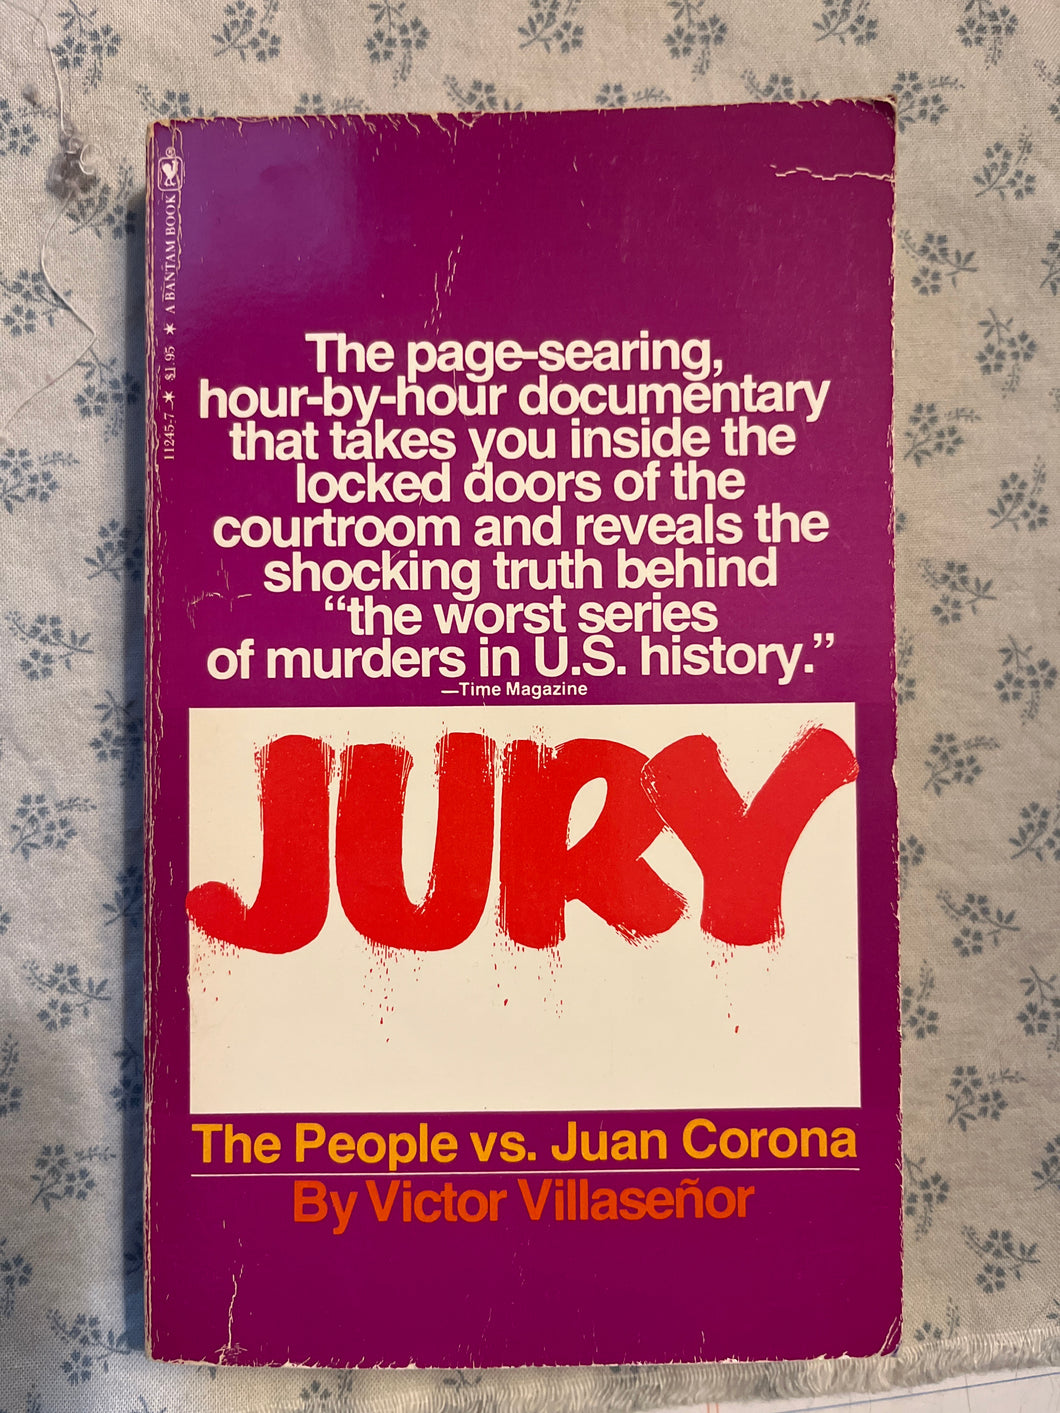 Jury: The People vs. Juan Corona